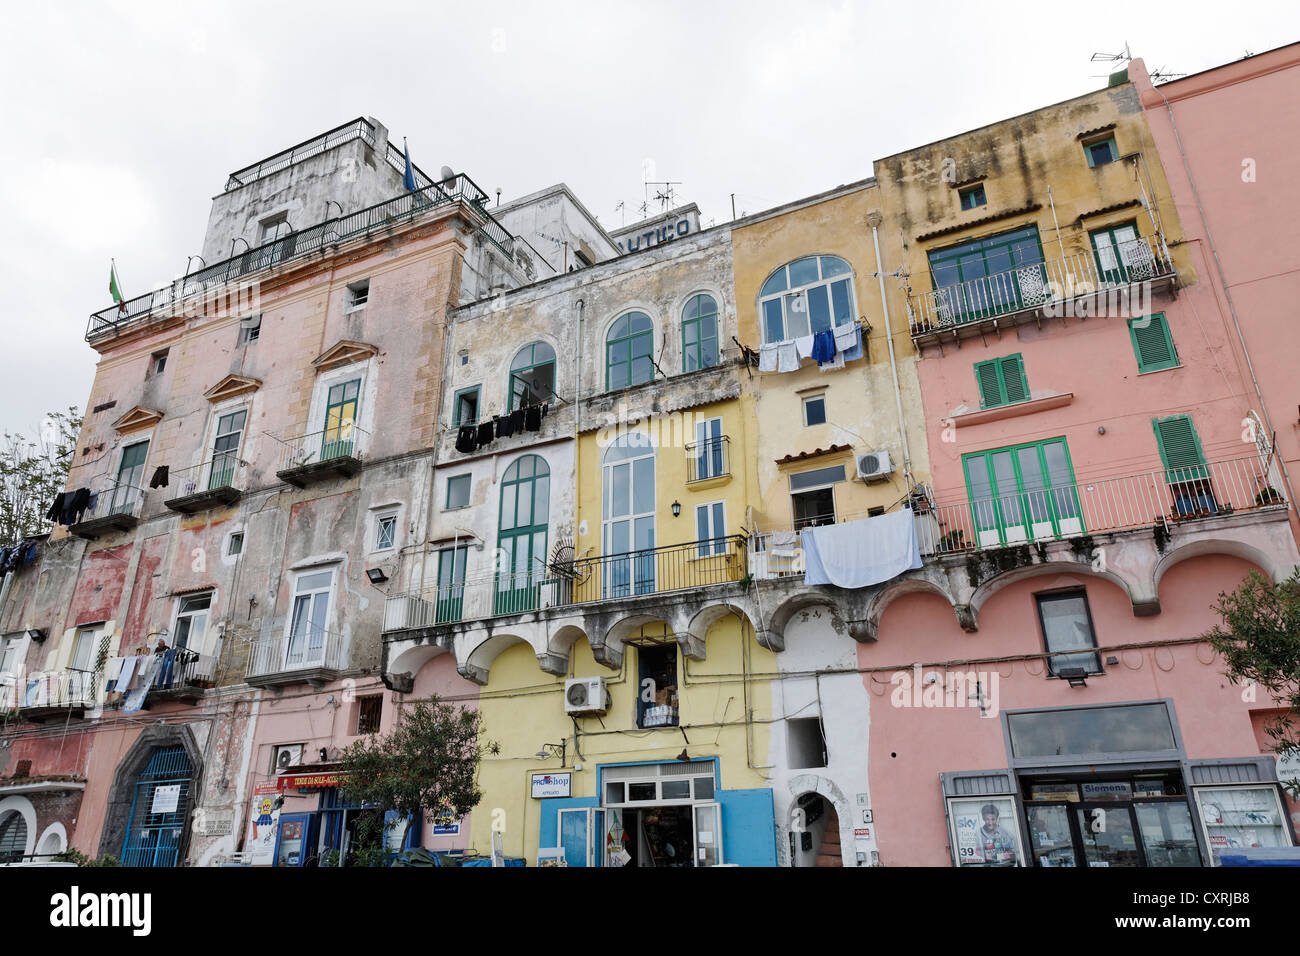 Pastellfarbene Häuser, Via Roma, Porto di Marina Grande Insel Procida, Golf von Neapel, Kampanien, Süditalien, Italien Stockfoto